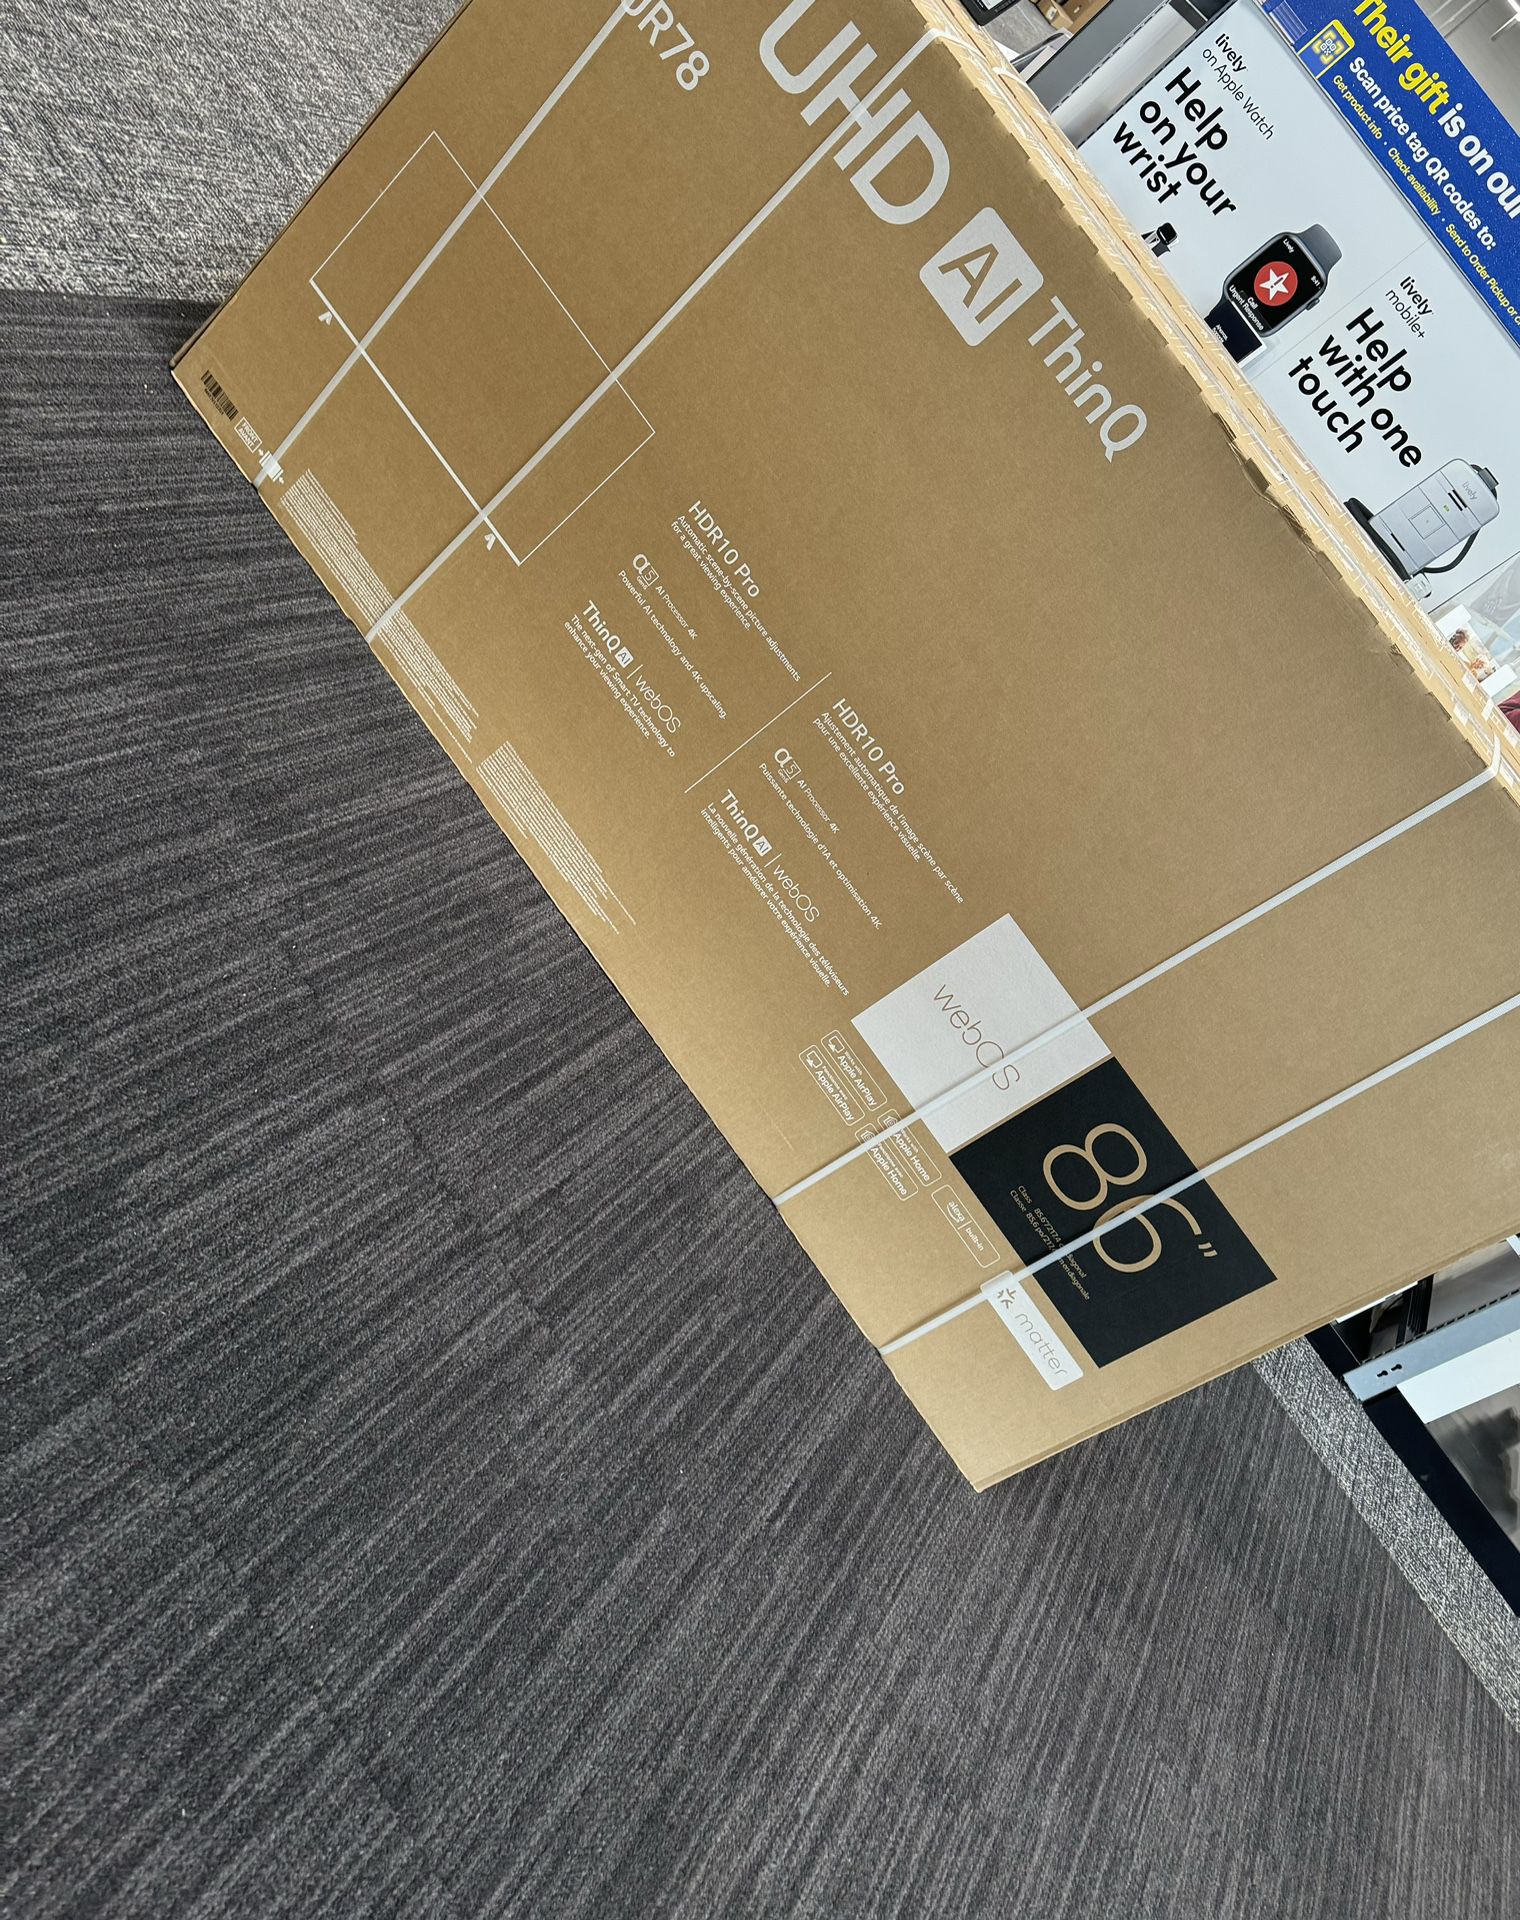 LG 86” 4k Smart TV